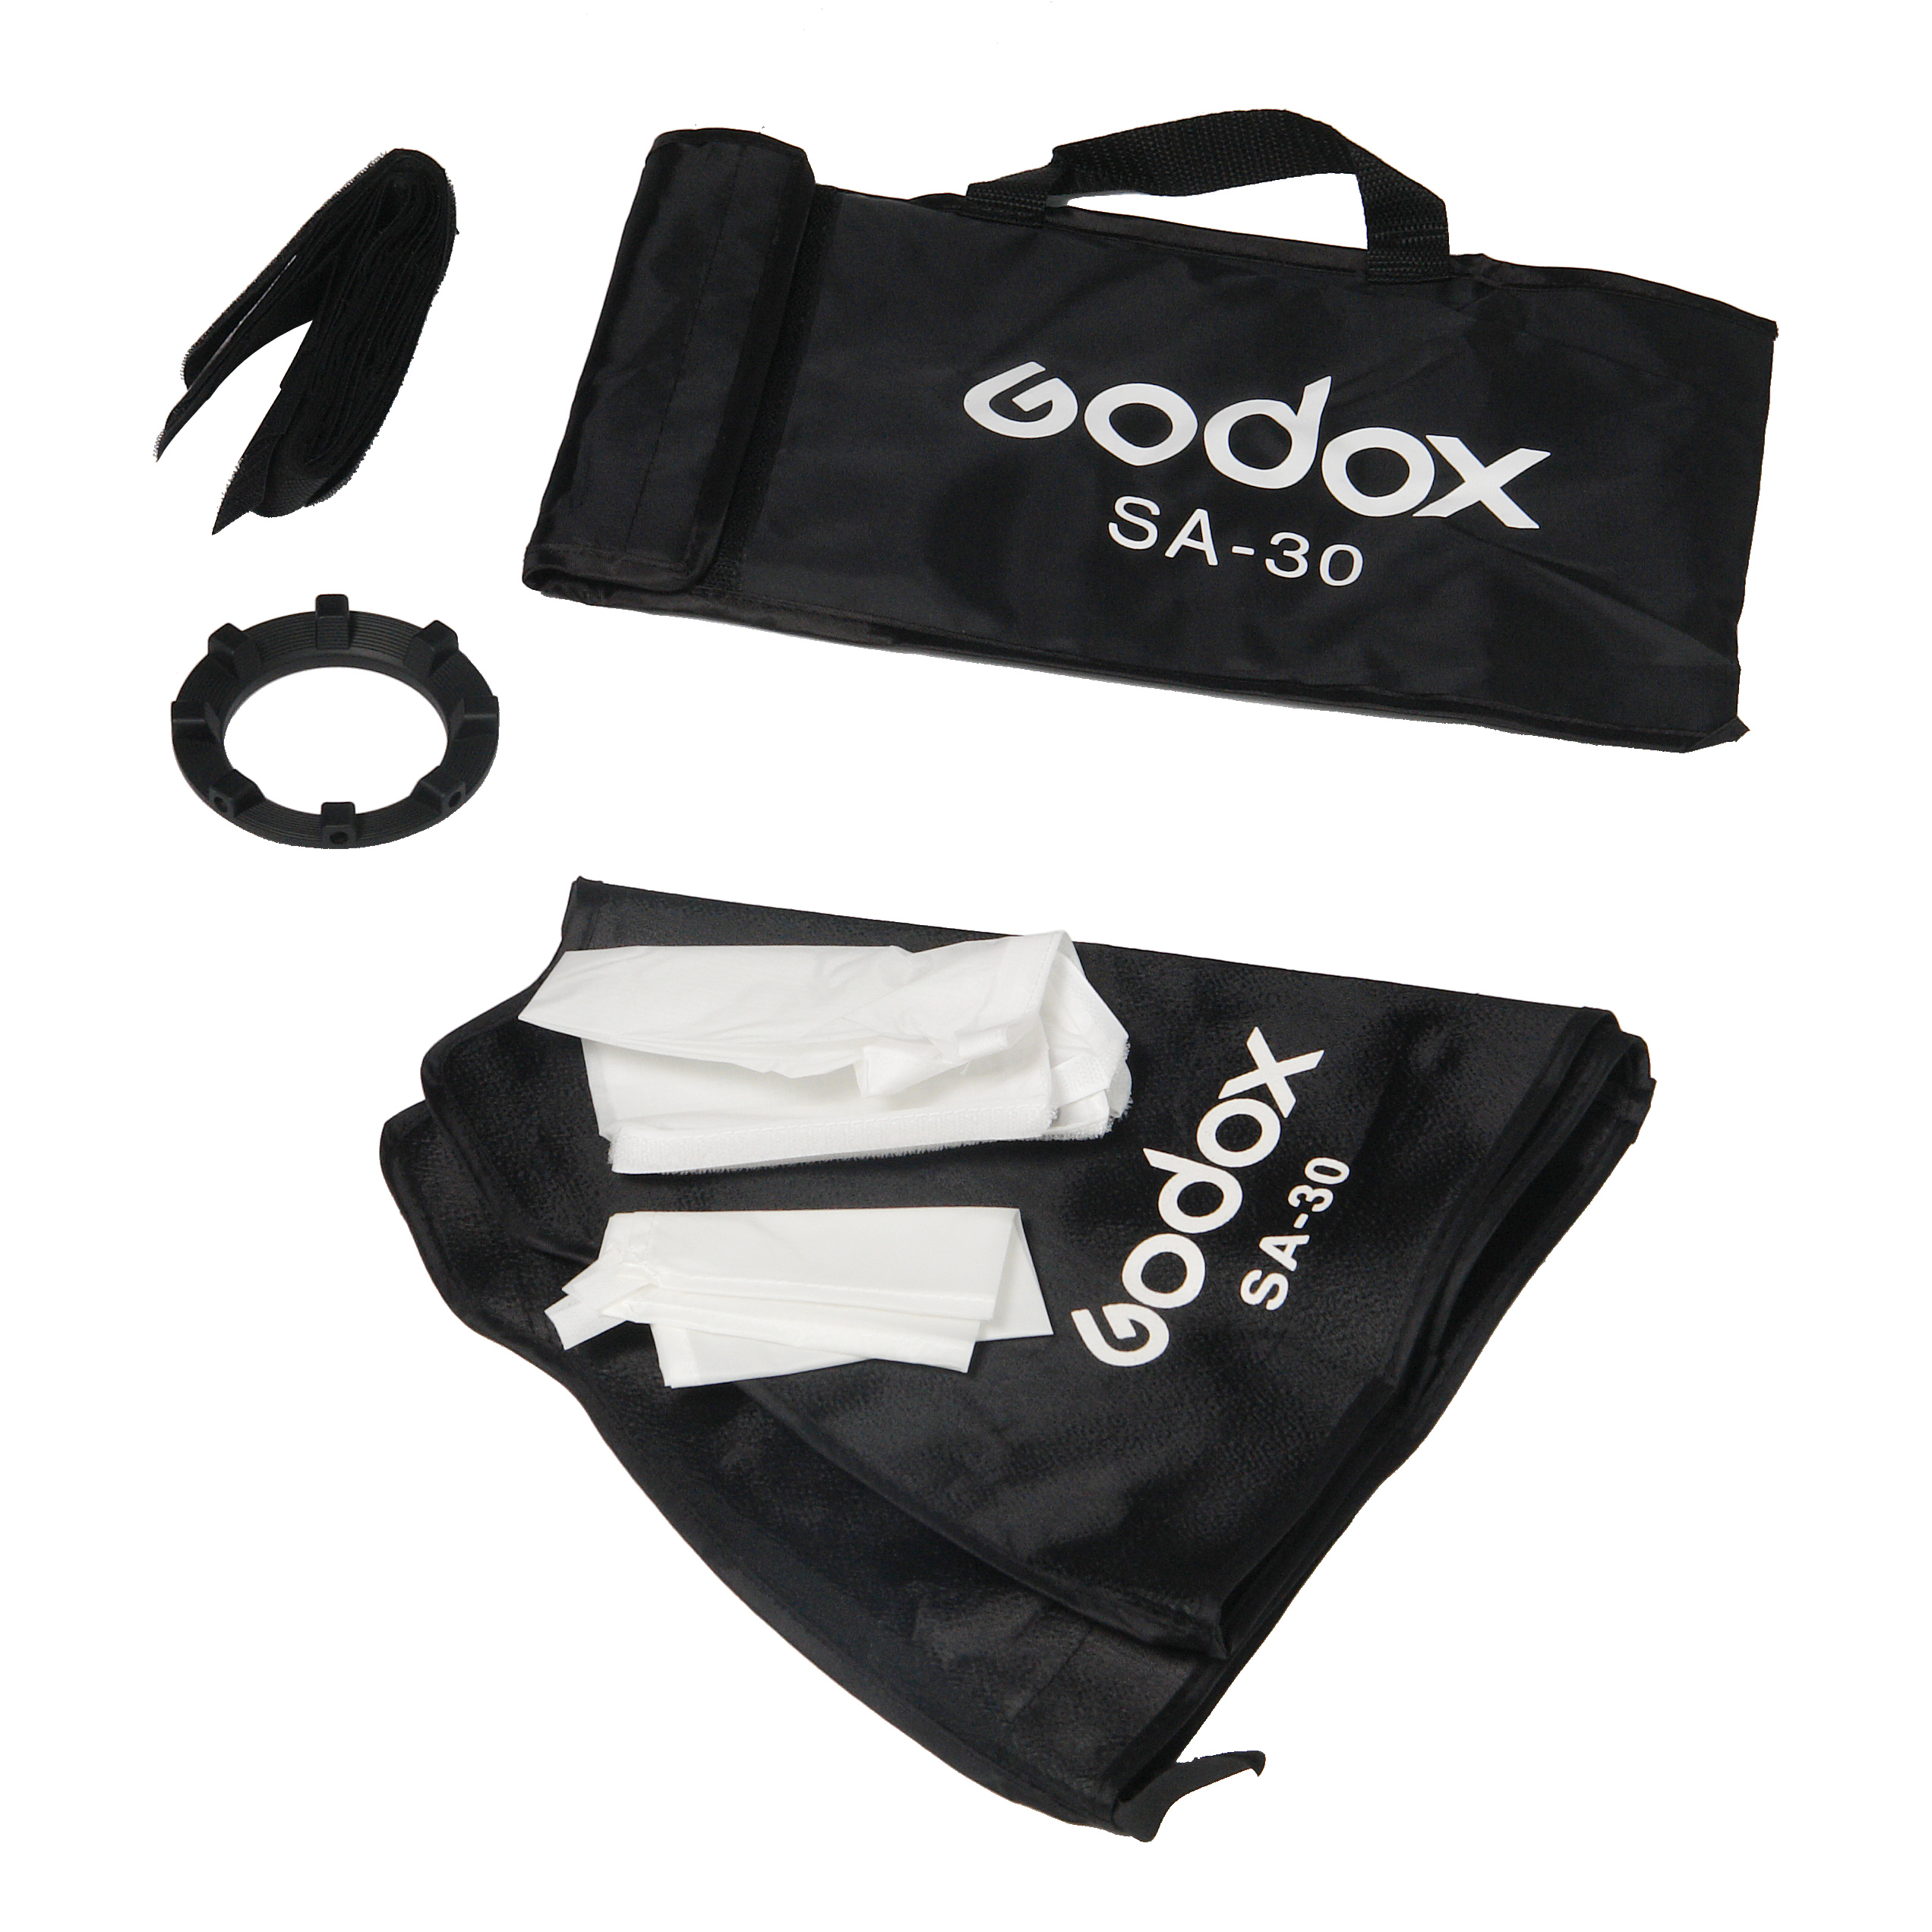     Godox S30-D   Ultra-mart